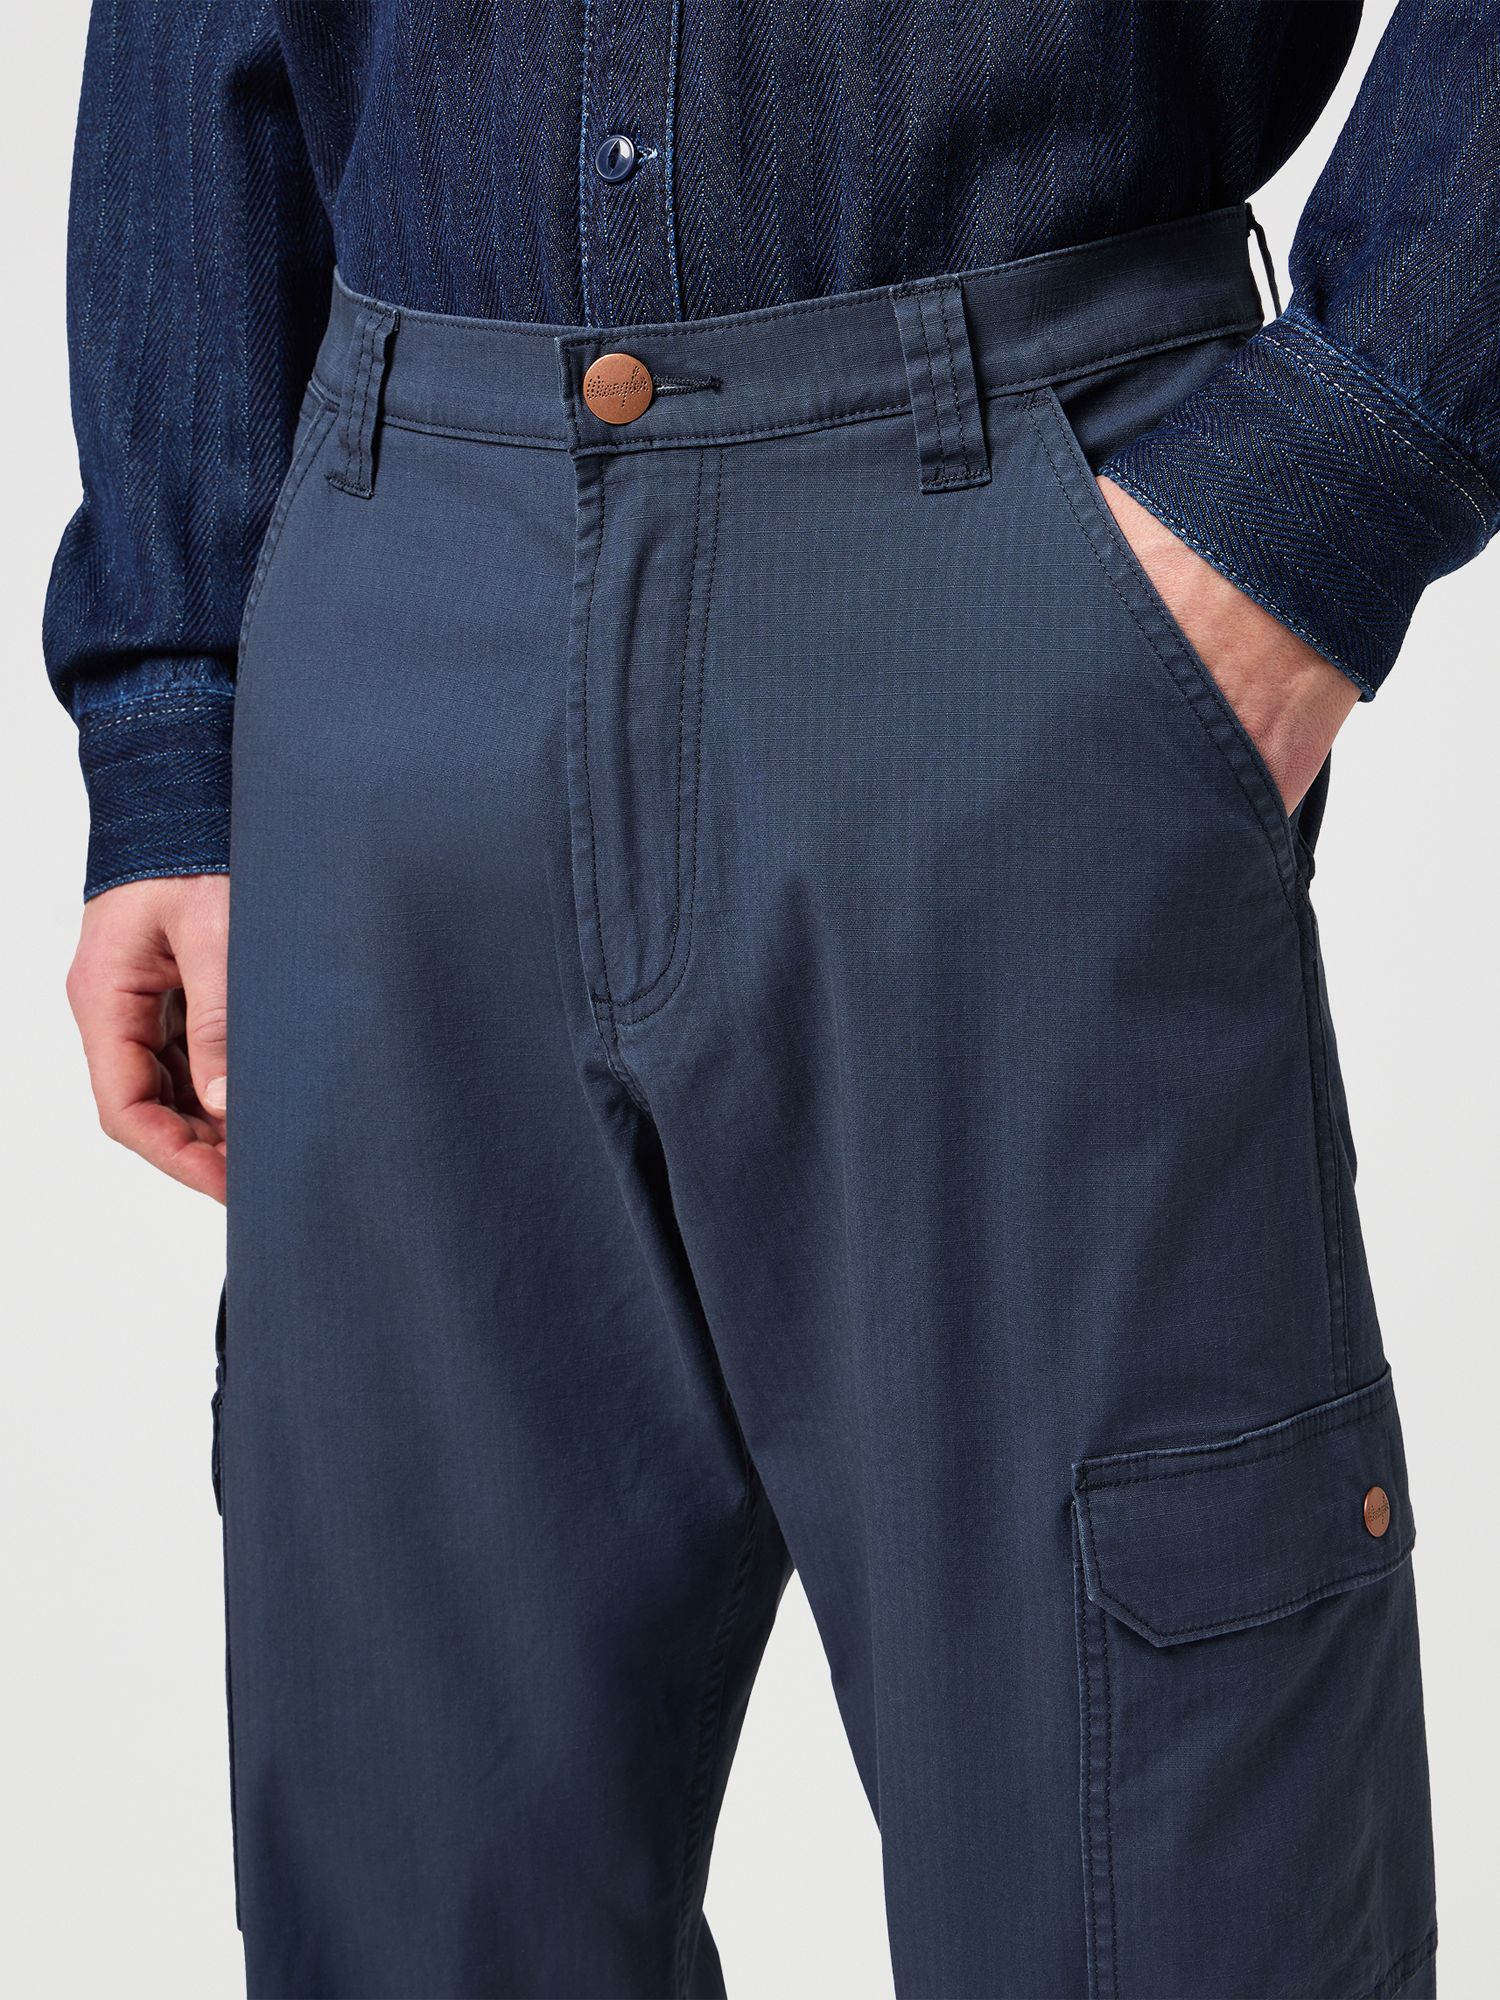 Buy Wrangler Casey Jones Utility Trousers, Navy Online at johnlewis.com